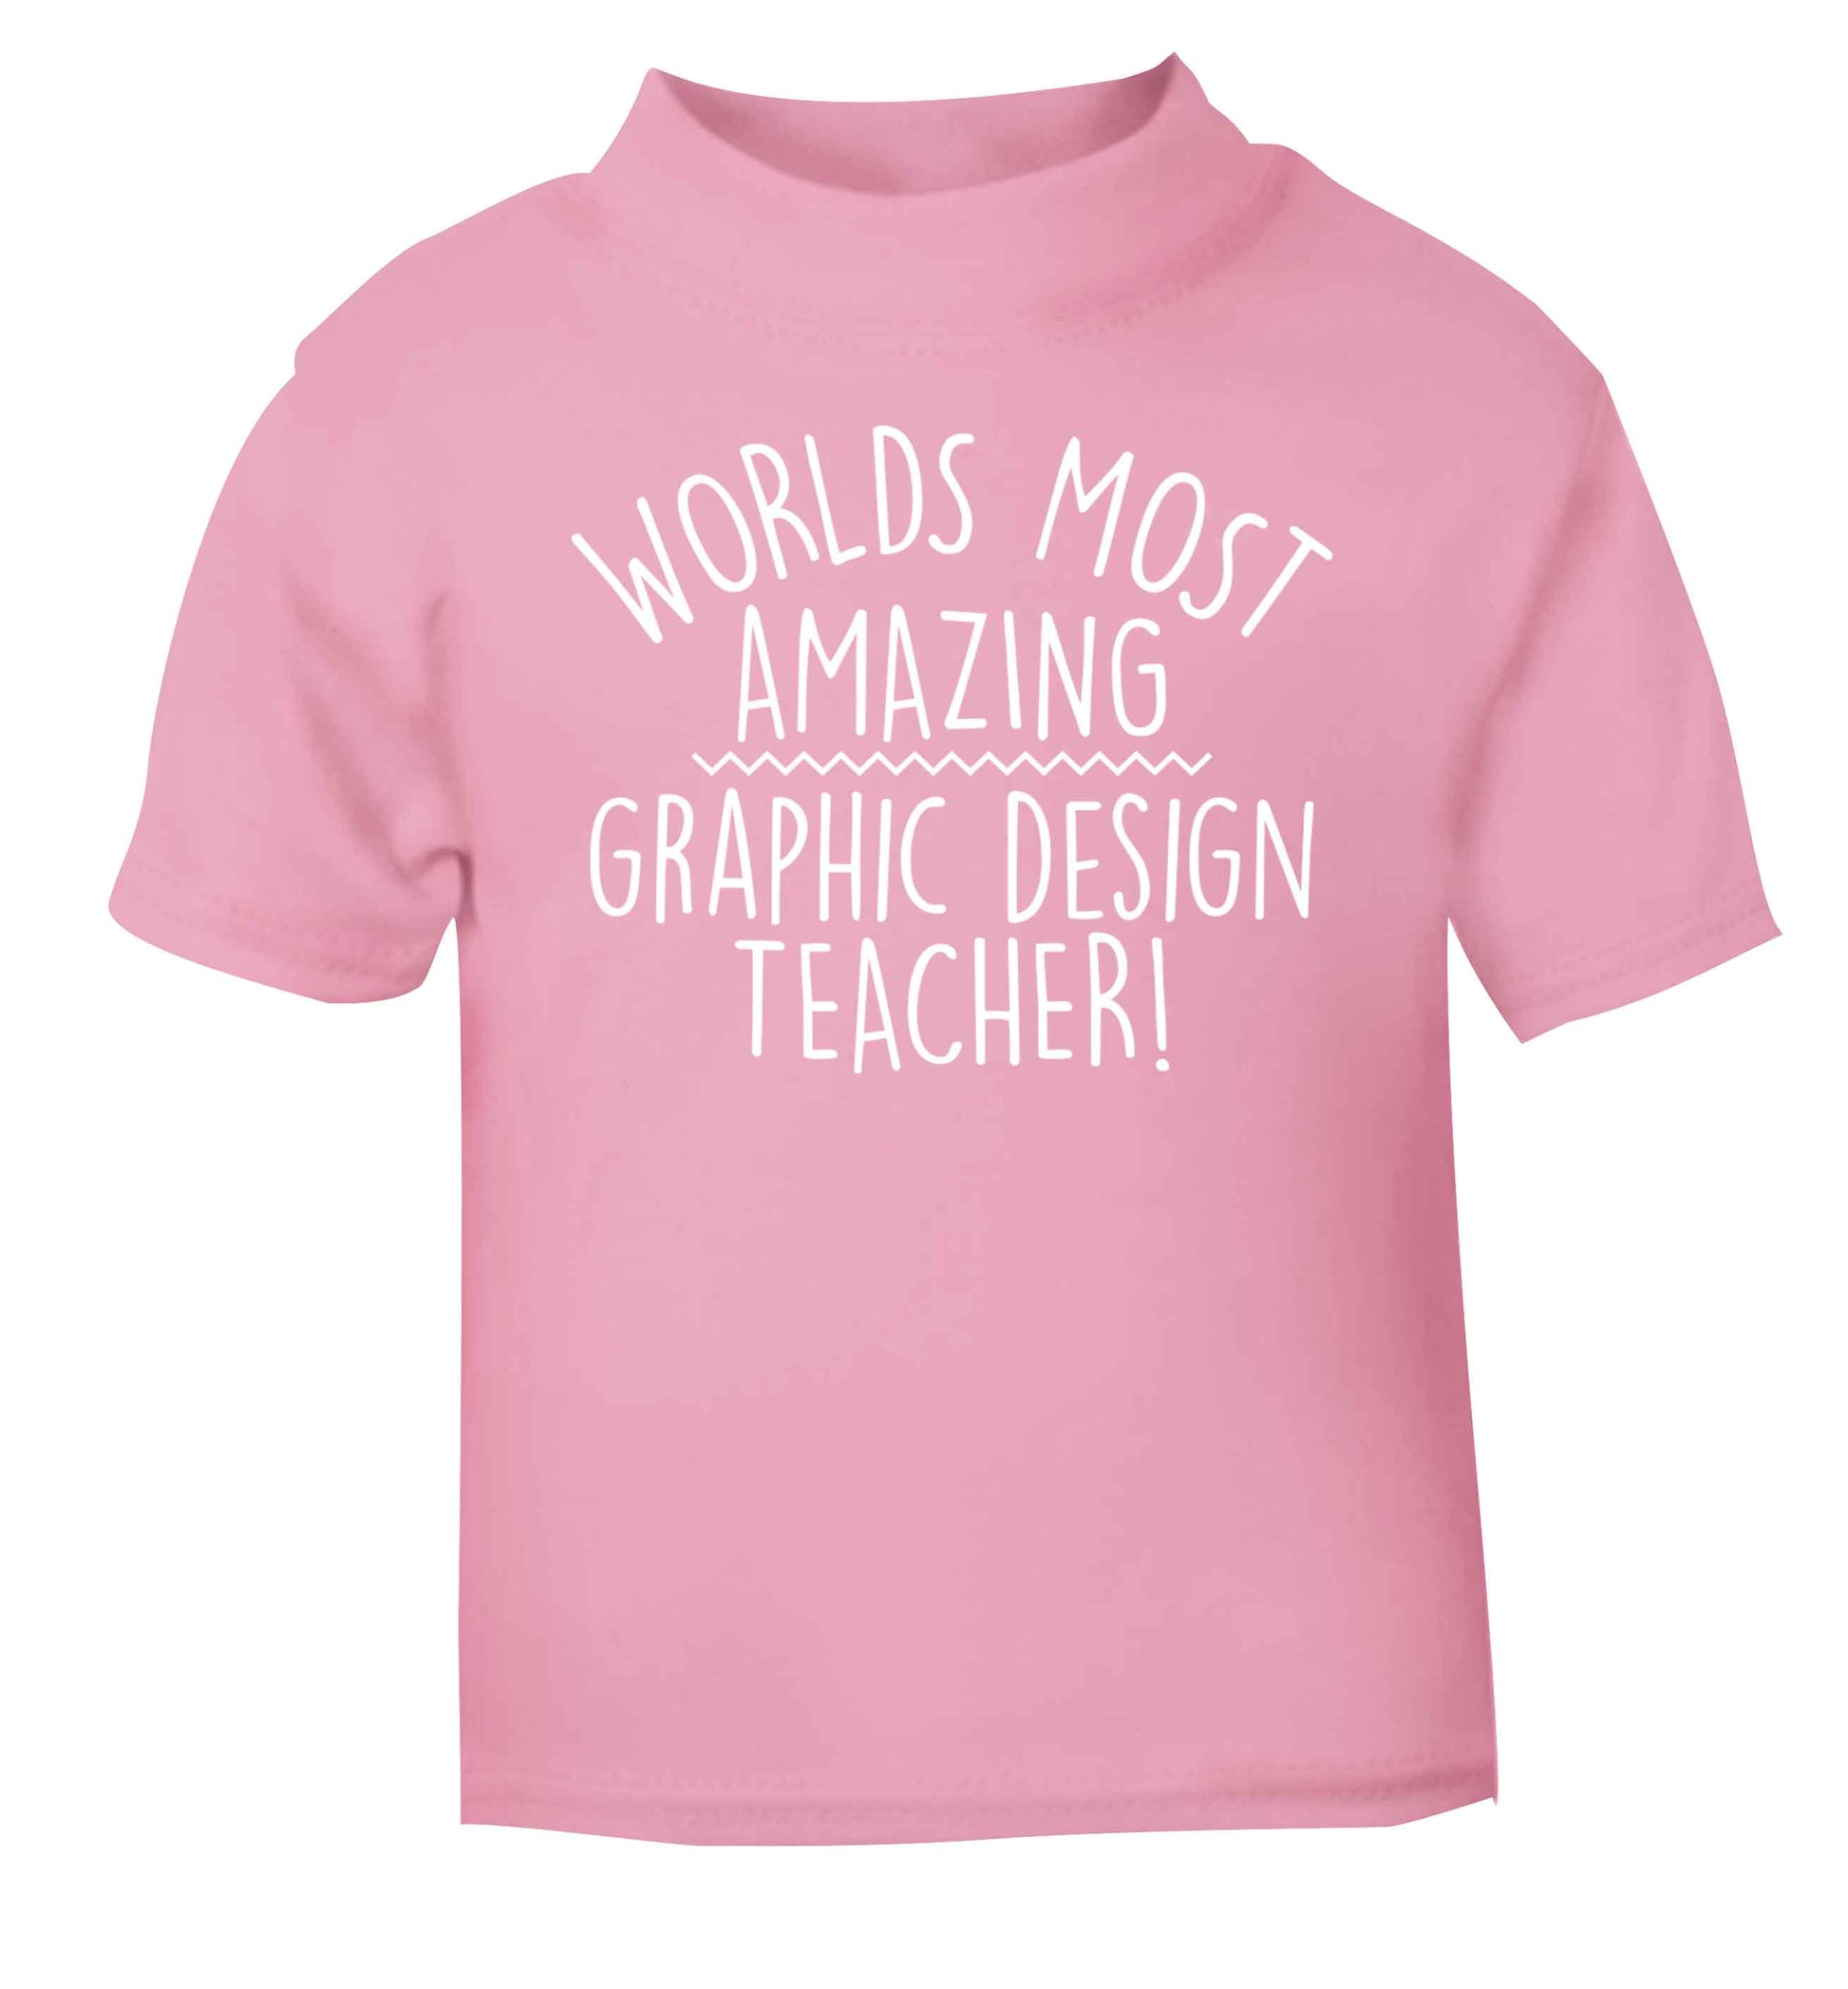 Worlds most amazing graphic design teacher light pink baby toddler Tshirt 2 Years